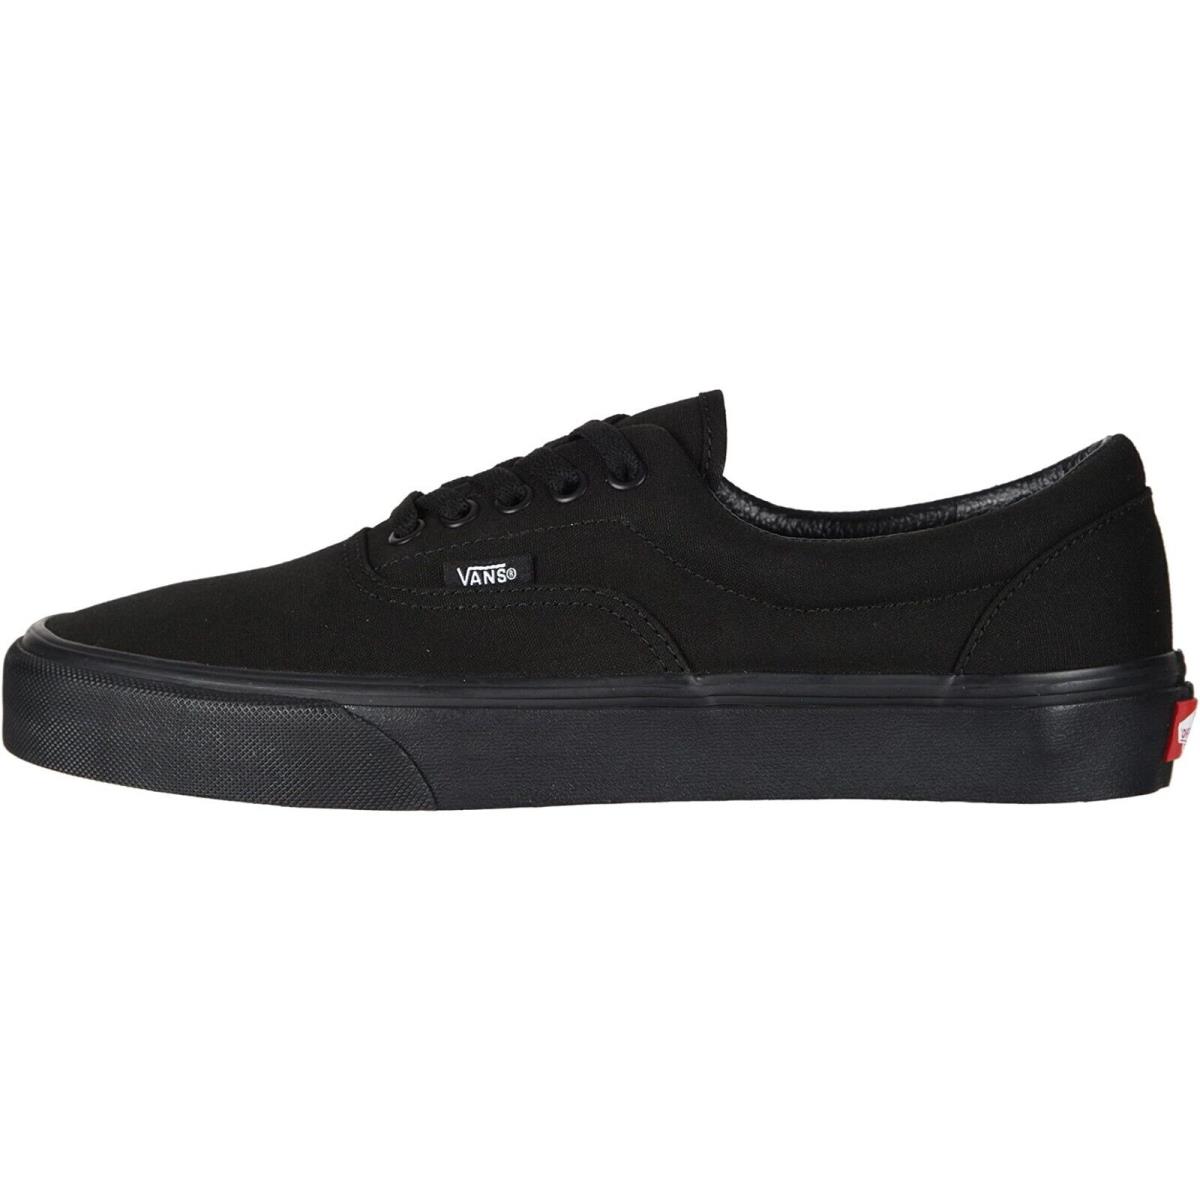 Vans Era Unisex Mens Womens Canvas Sneakers Classic Skate Shoes Black/Black